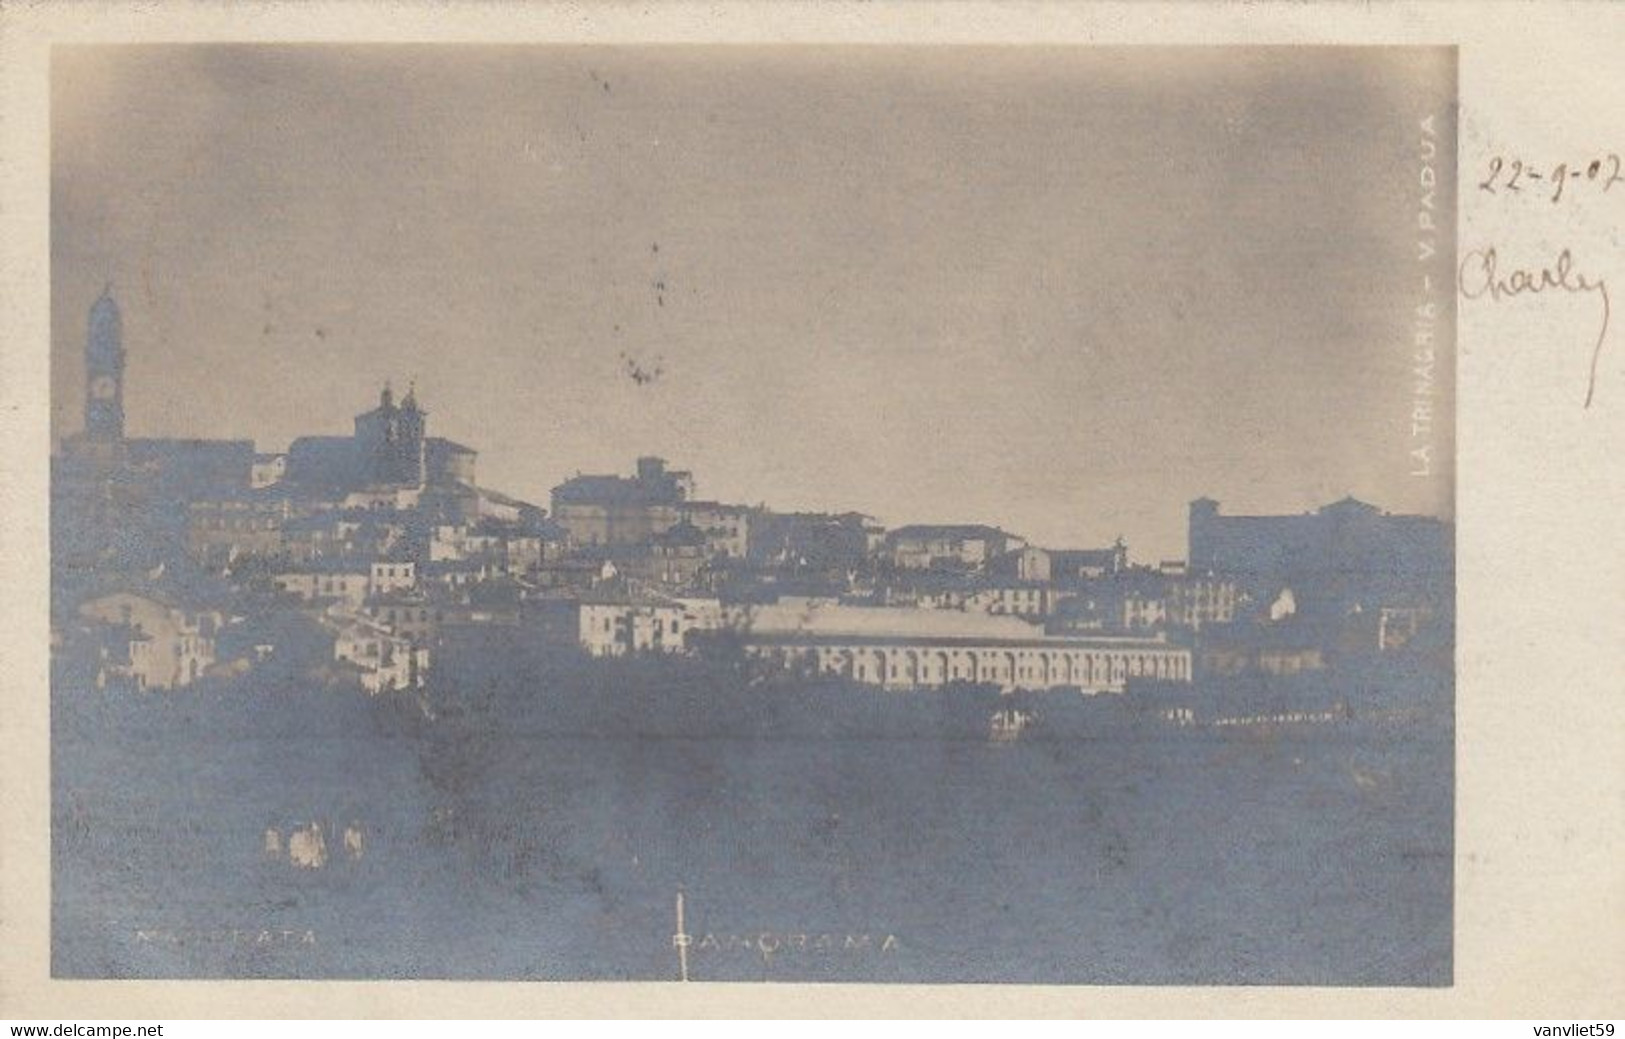 MACERATA-PANORAMA- CARTOLINA VERA FOTOGRAFIA-VIAGGIATA IL 22-9-1907 - Macerata